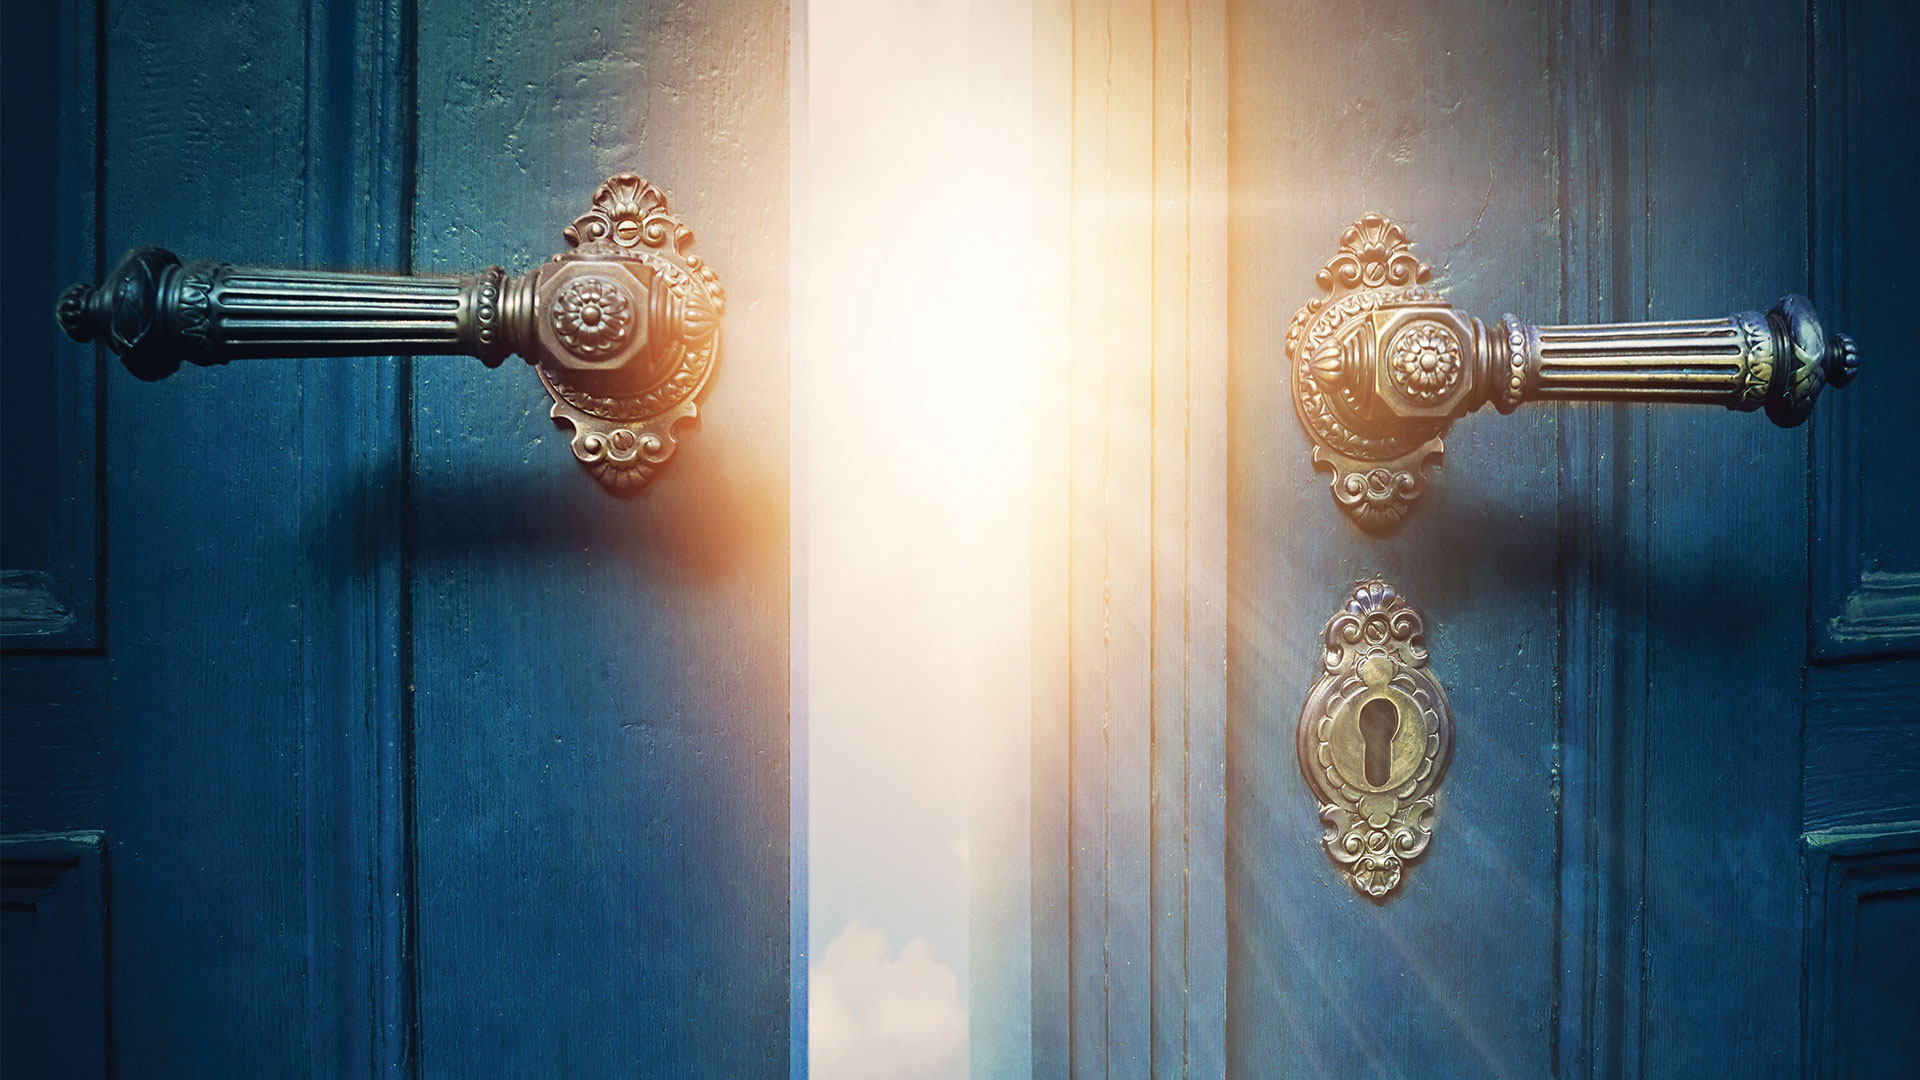 Two blue doors opening, revealing the sun